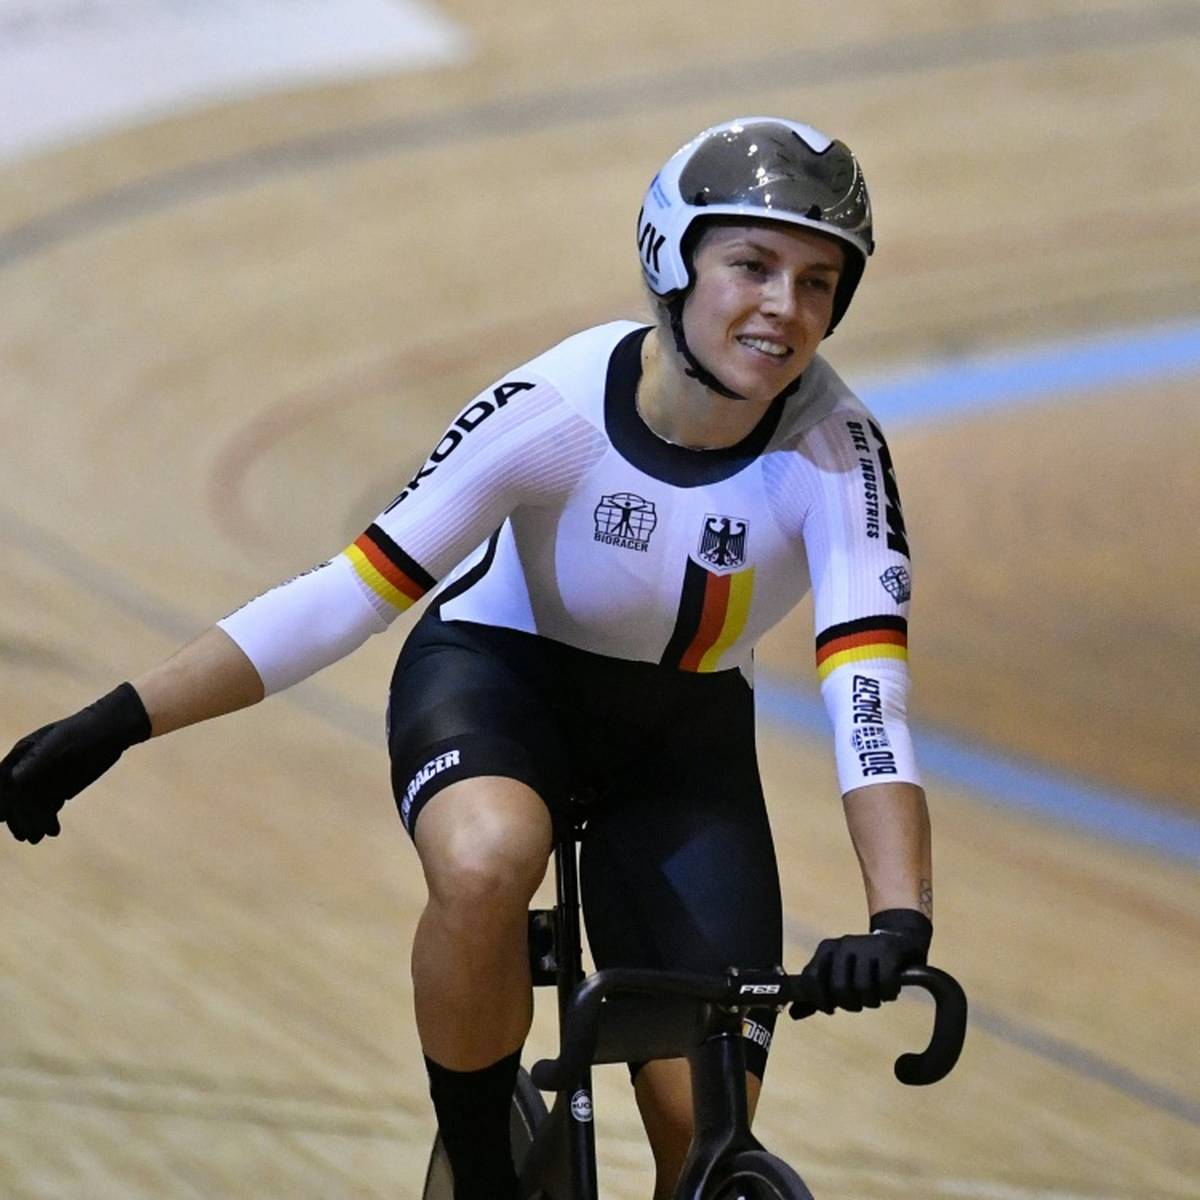 Bahnrad-Weltmeisterin Emma Hinze wünscht sich einen offeneren Umgang mit dem Thema Periode im Sport.